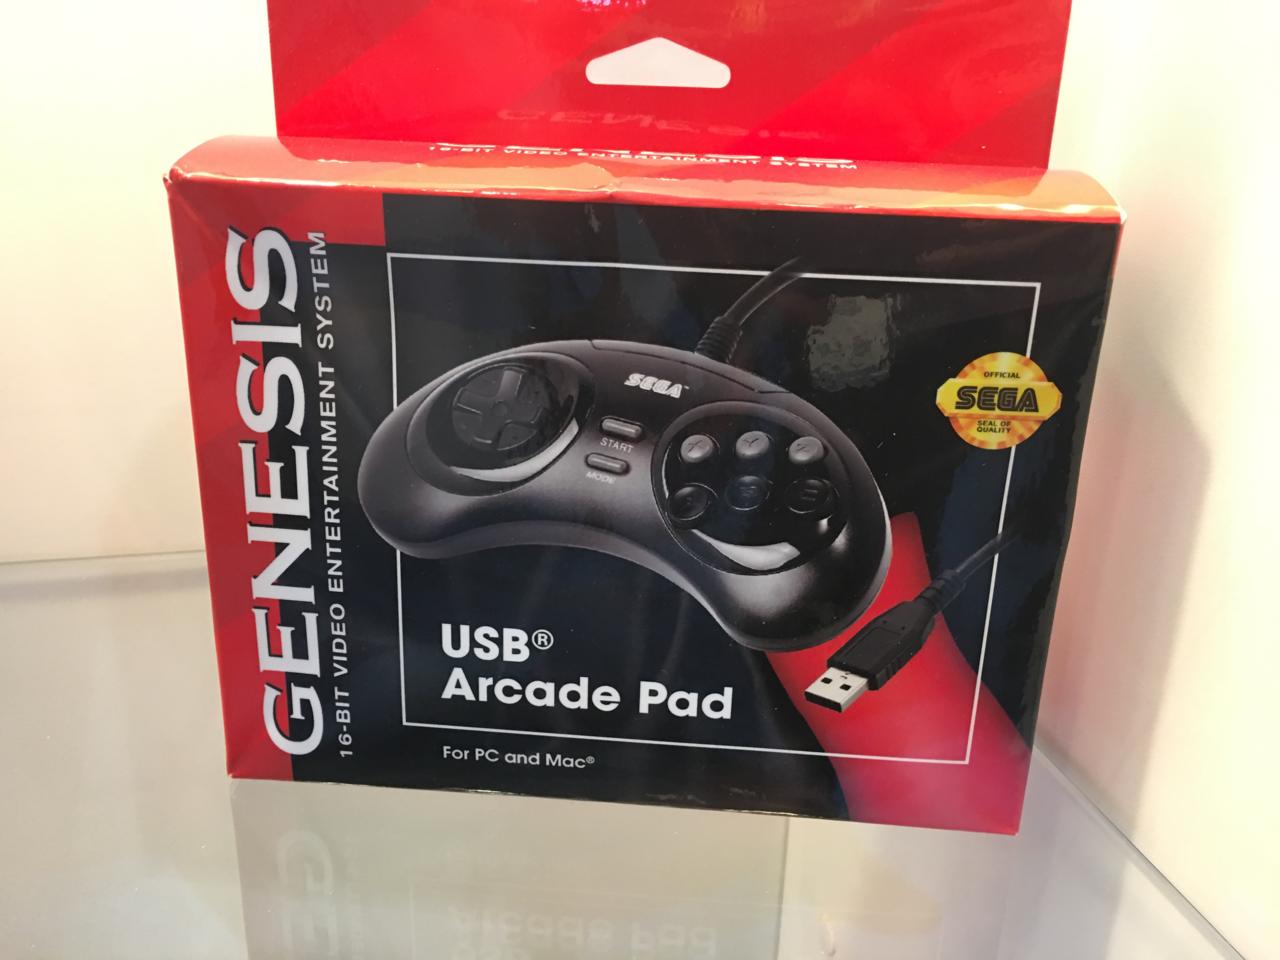 Sega Genesis USB Arcade Pad